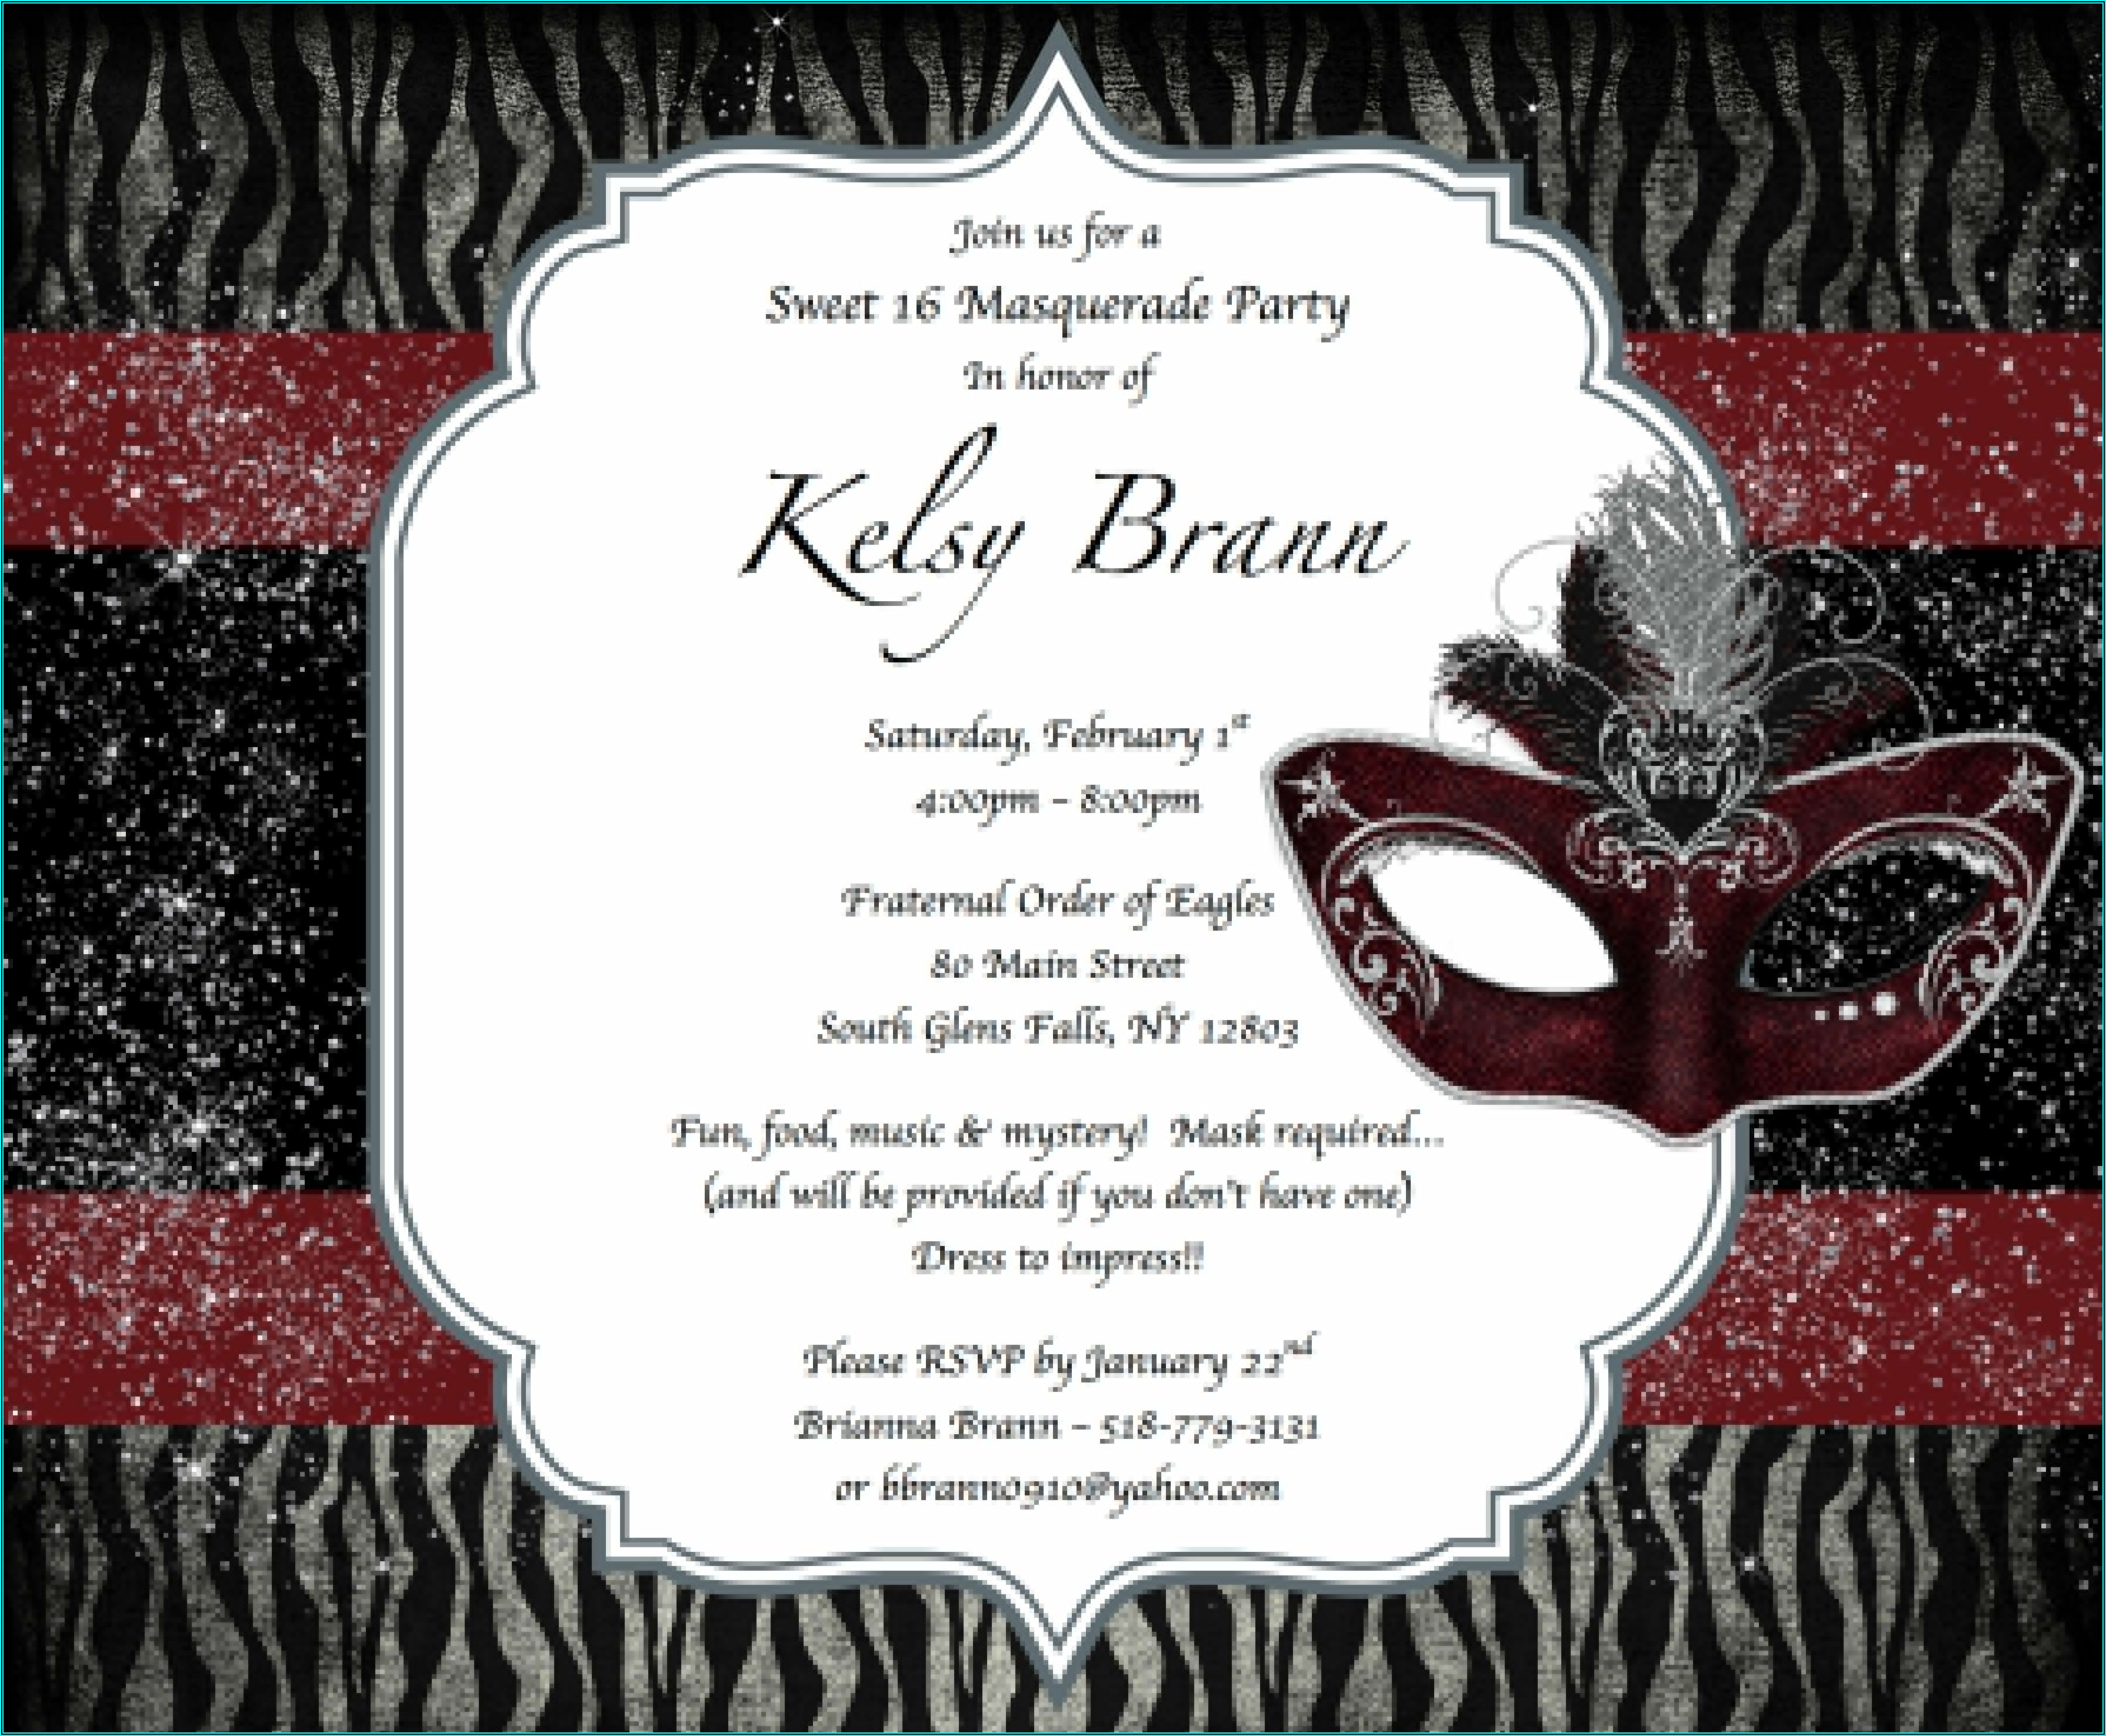 Sweet 16 Masquerade Party Invitations